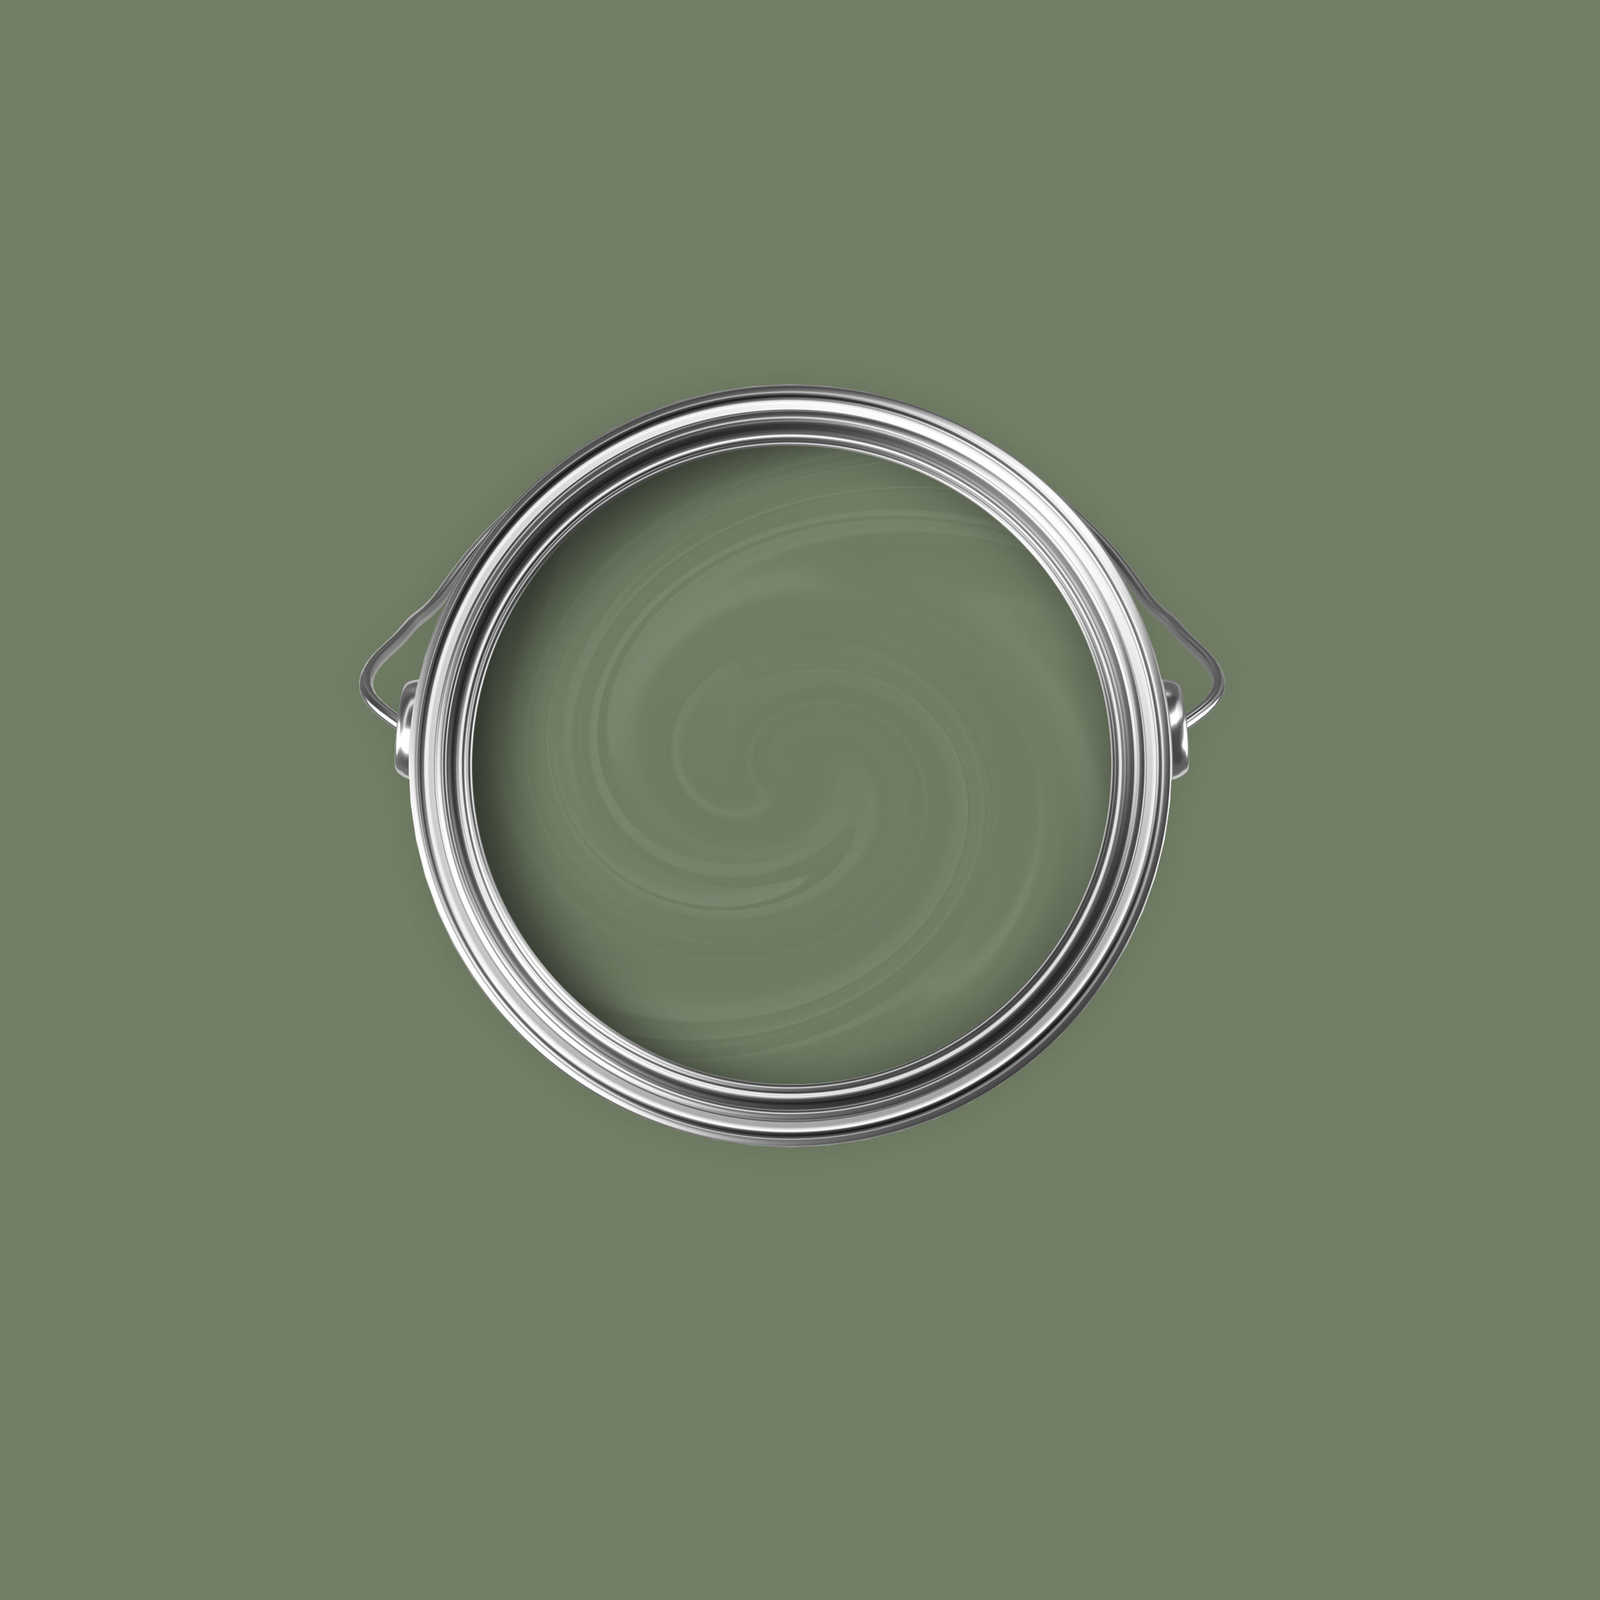             Premium Wandfarbe entspannendes Olivgrün »Gorgeous Green« NW504 – 2,5 Liter
        